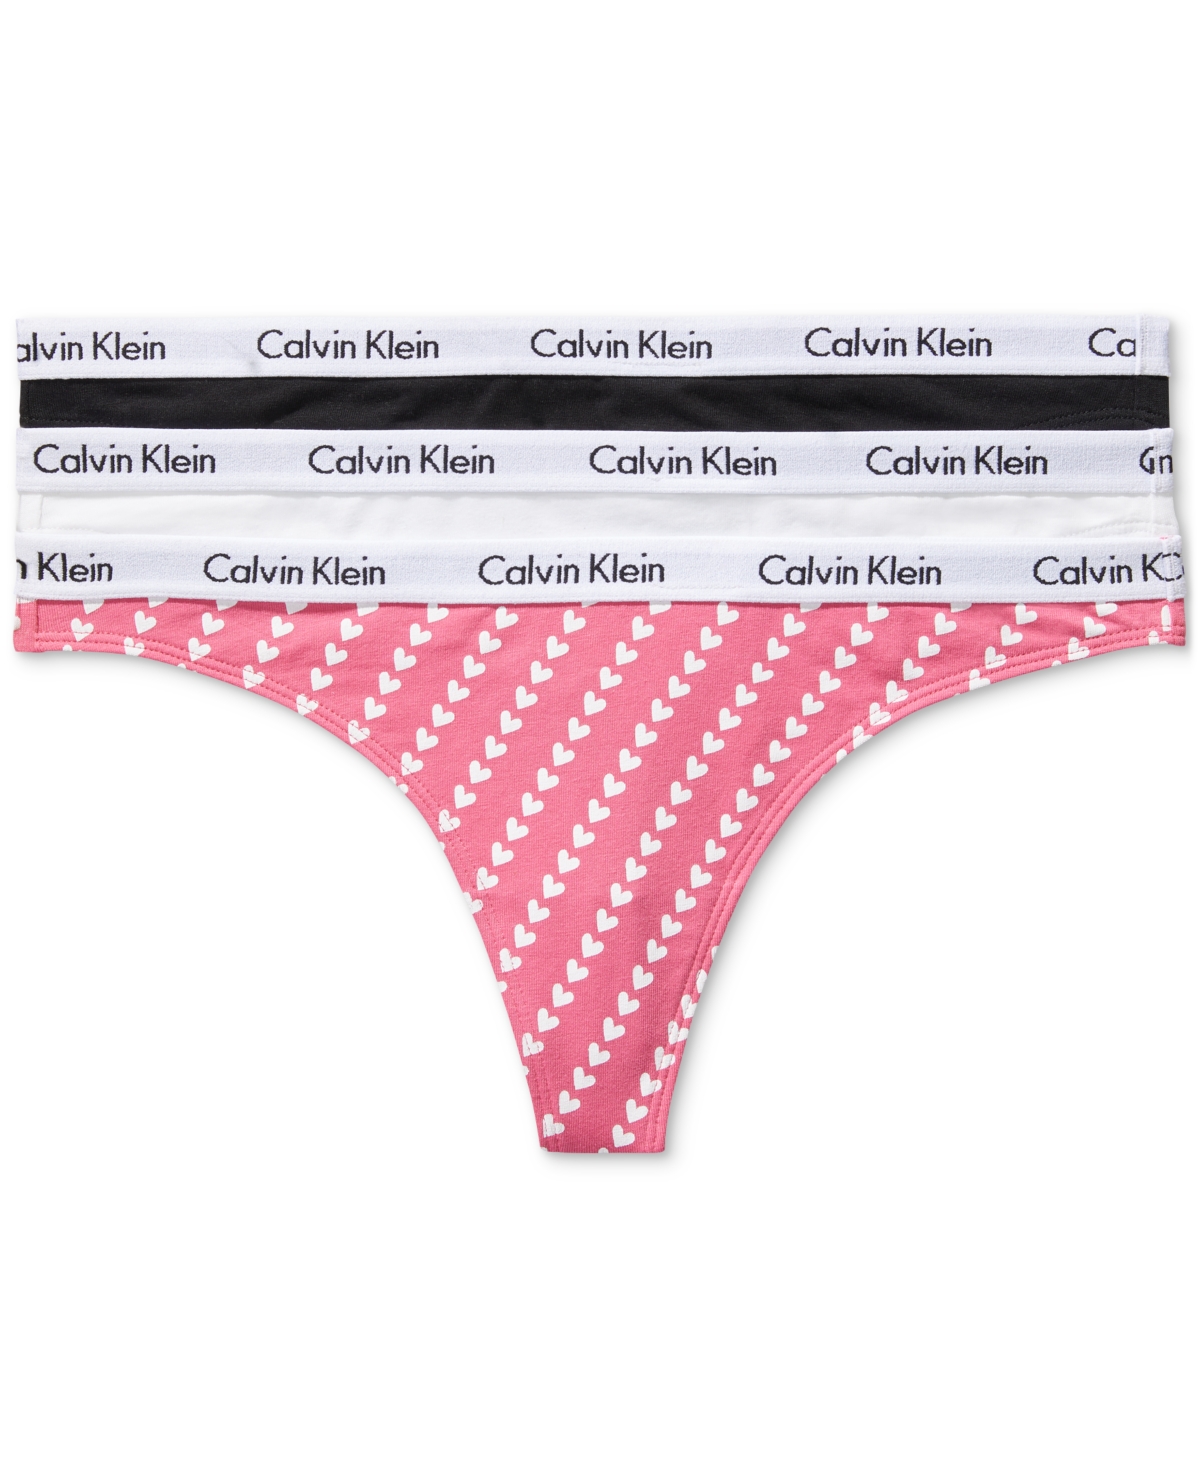 Calvin Klein Carousel Cotton 3-pack Thong Underwear Qd3587 In Black,white,pink Heart Print